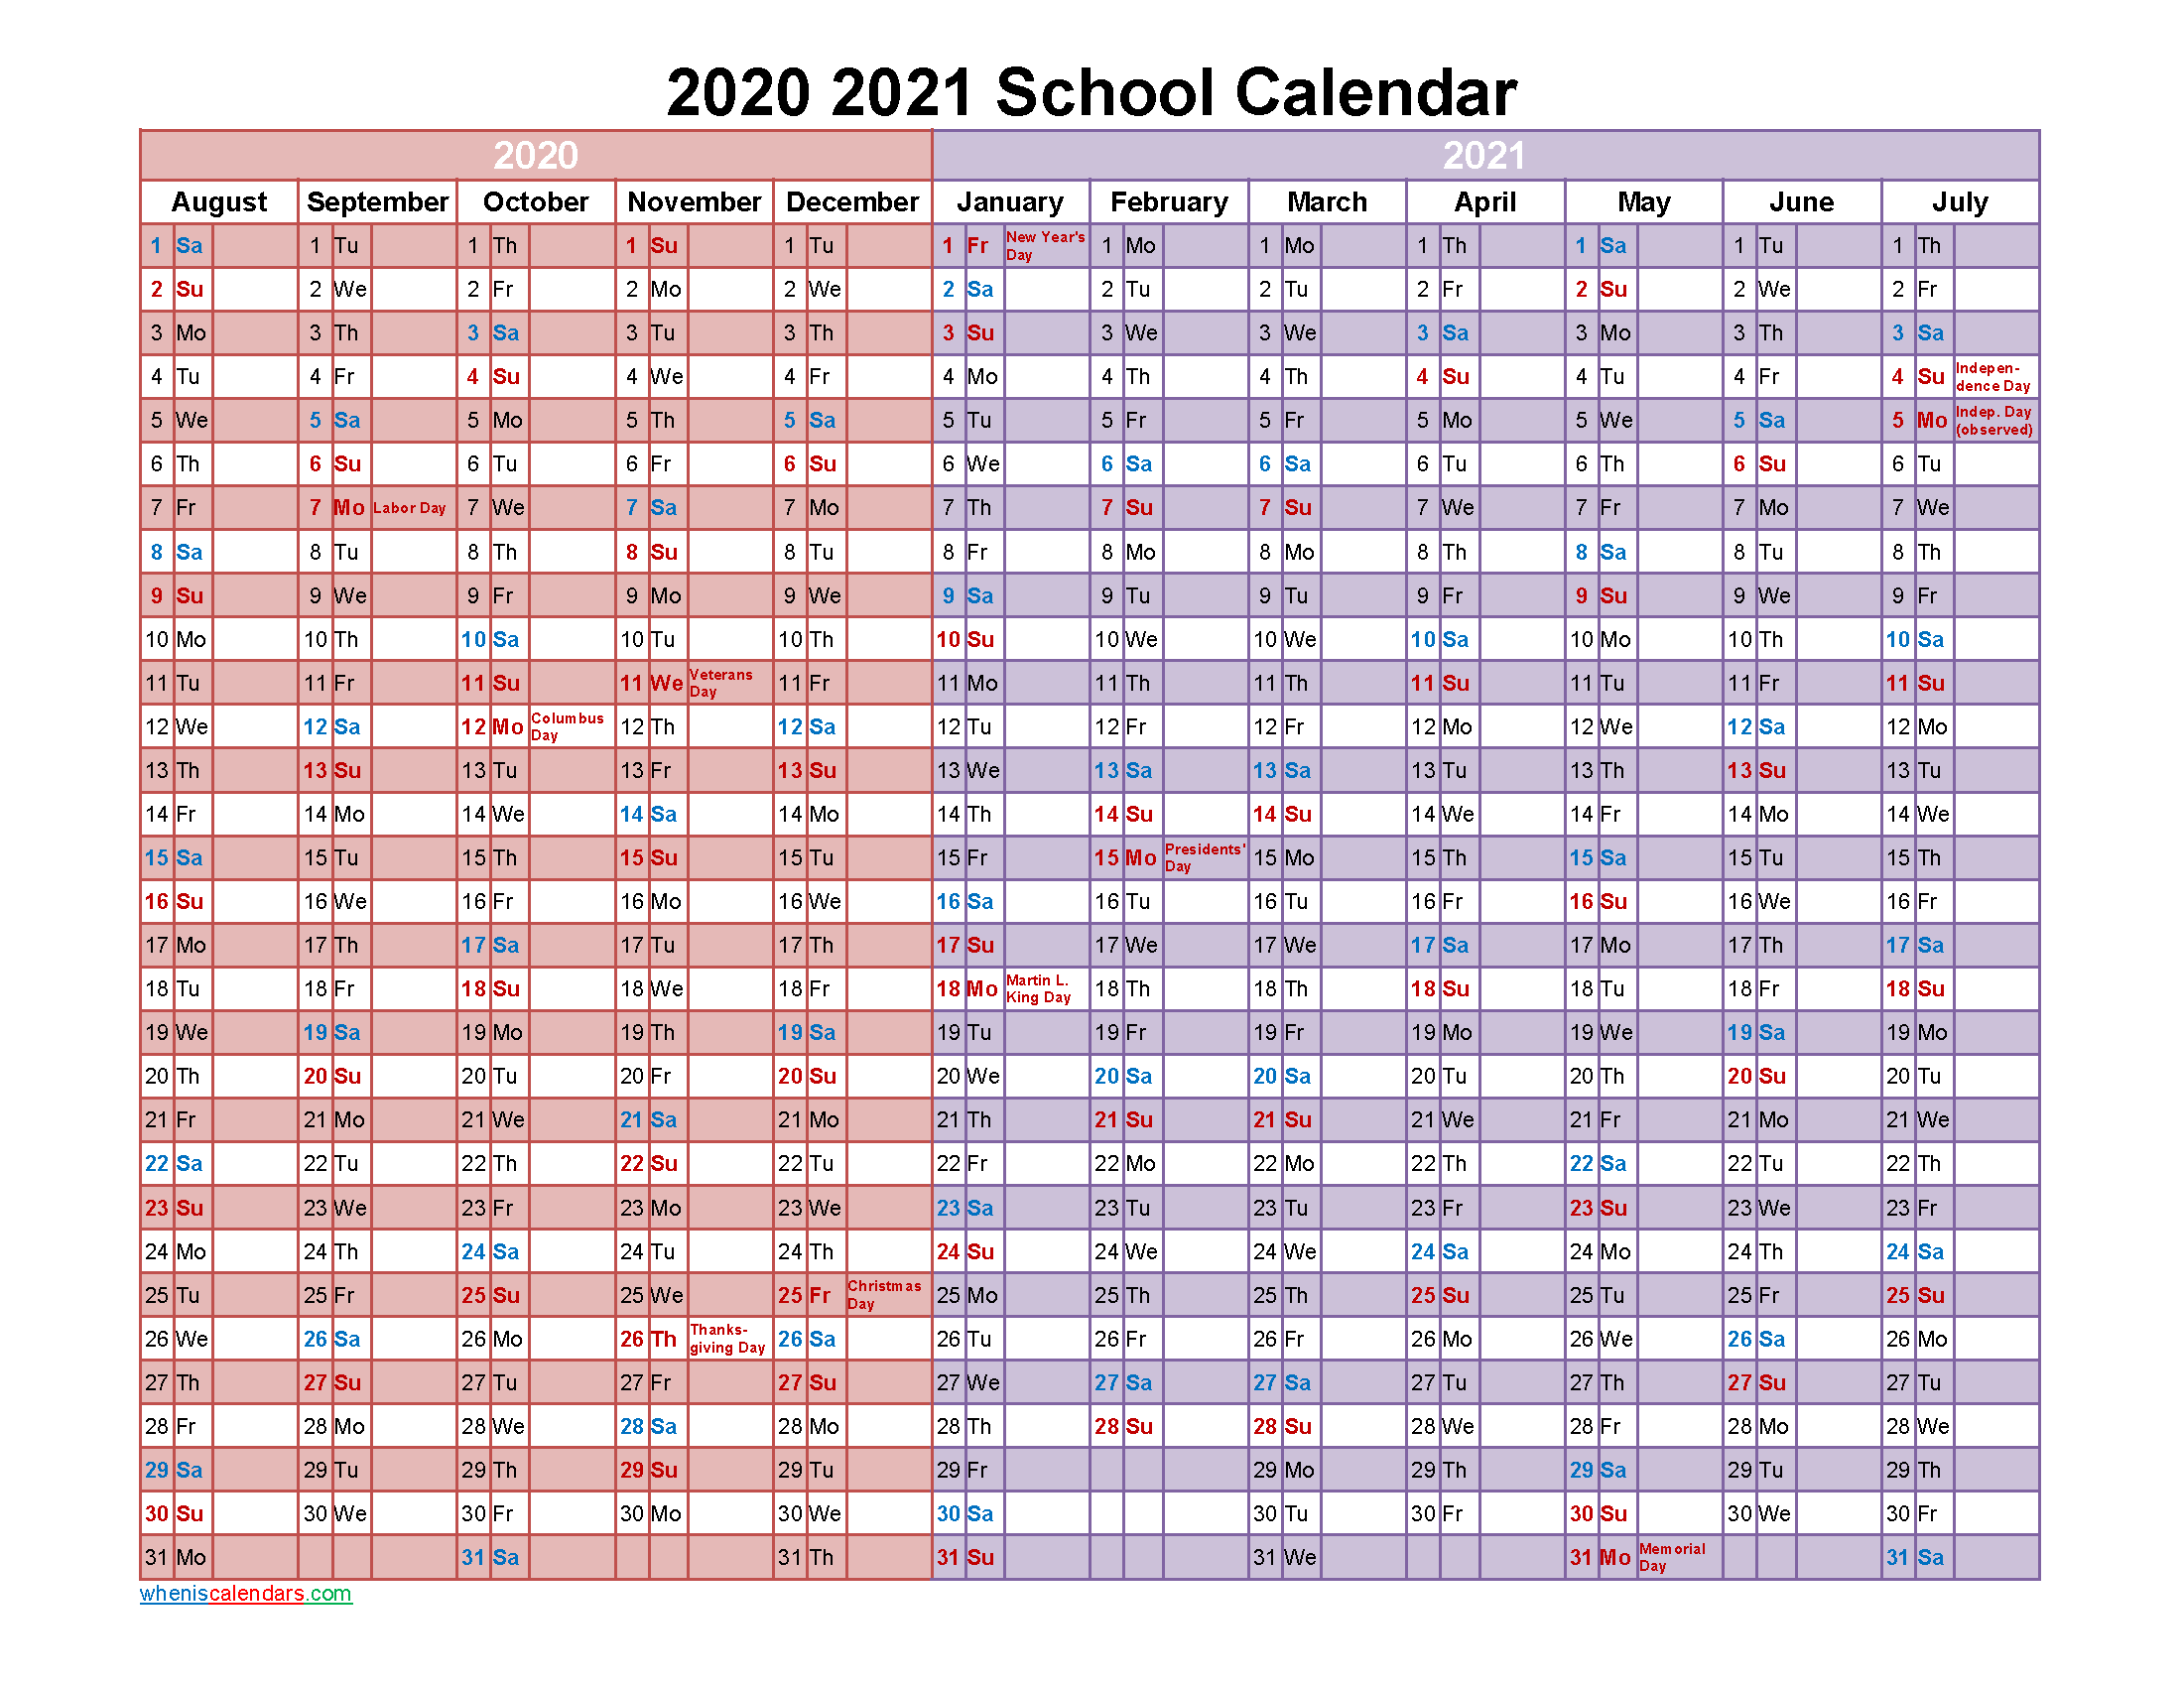 2020 and 2021 School Calendar Printable - Template No.21scl63